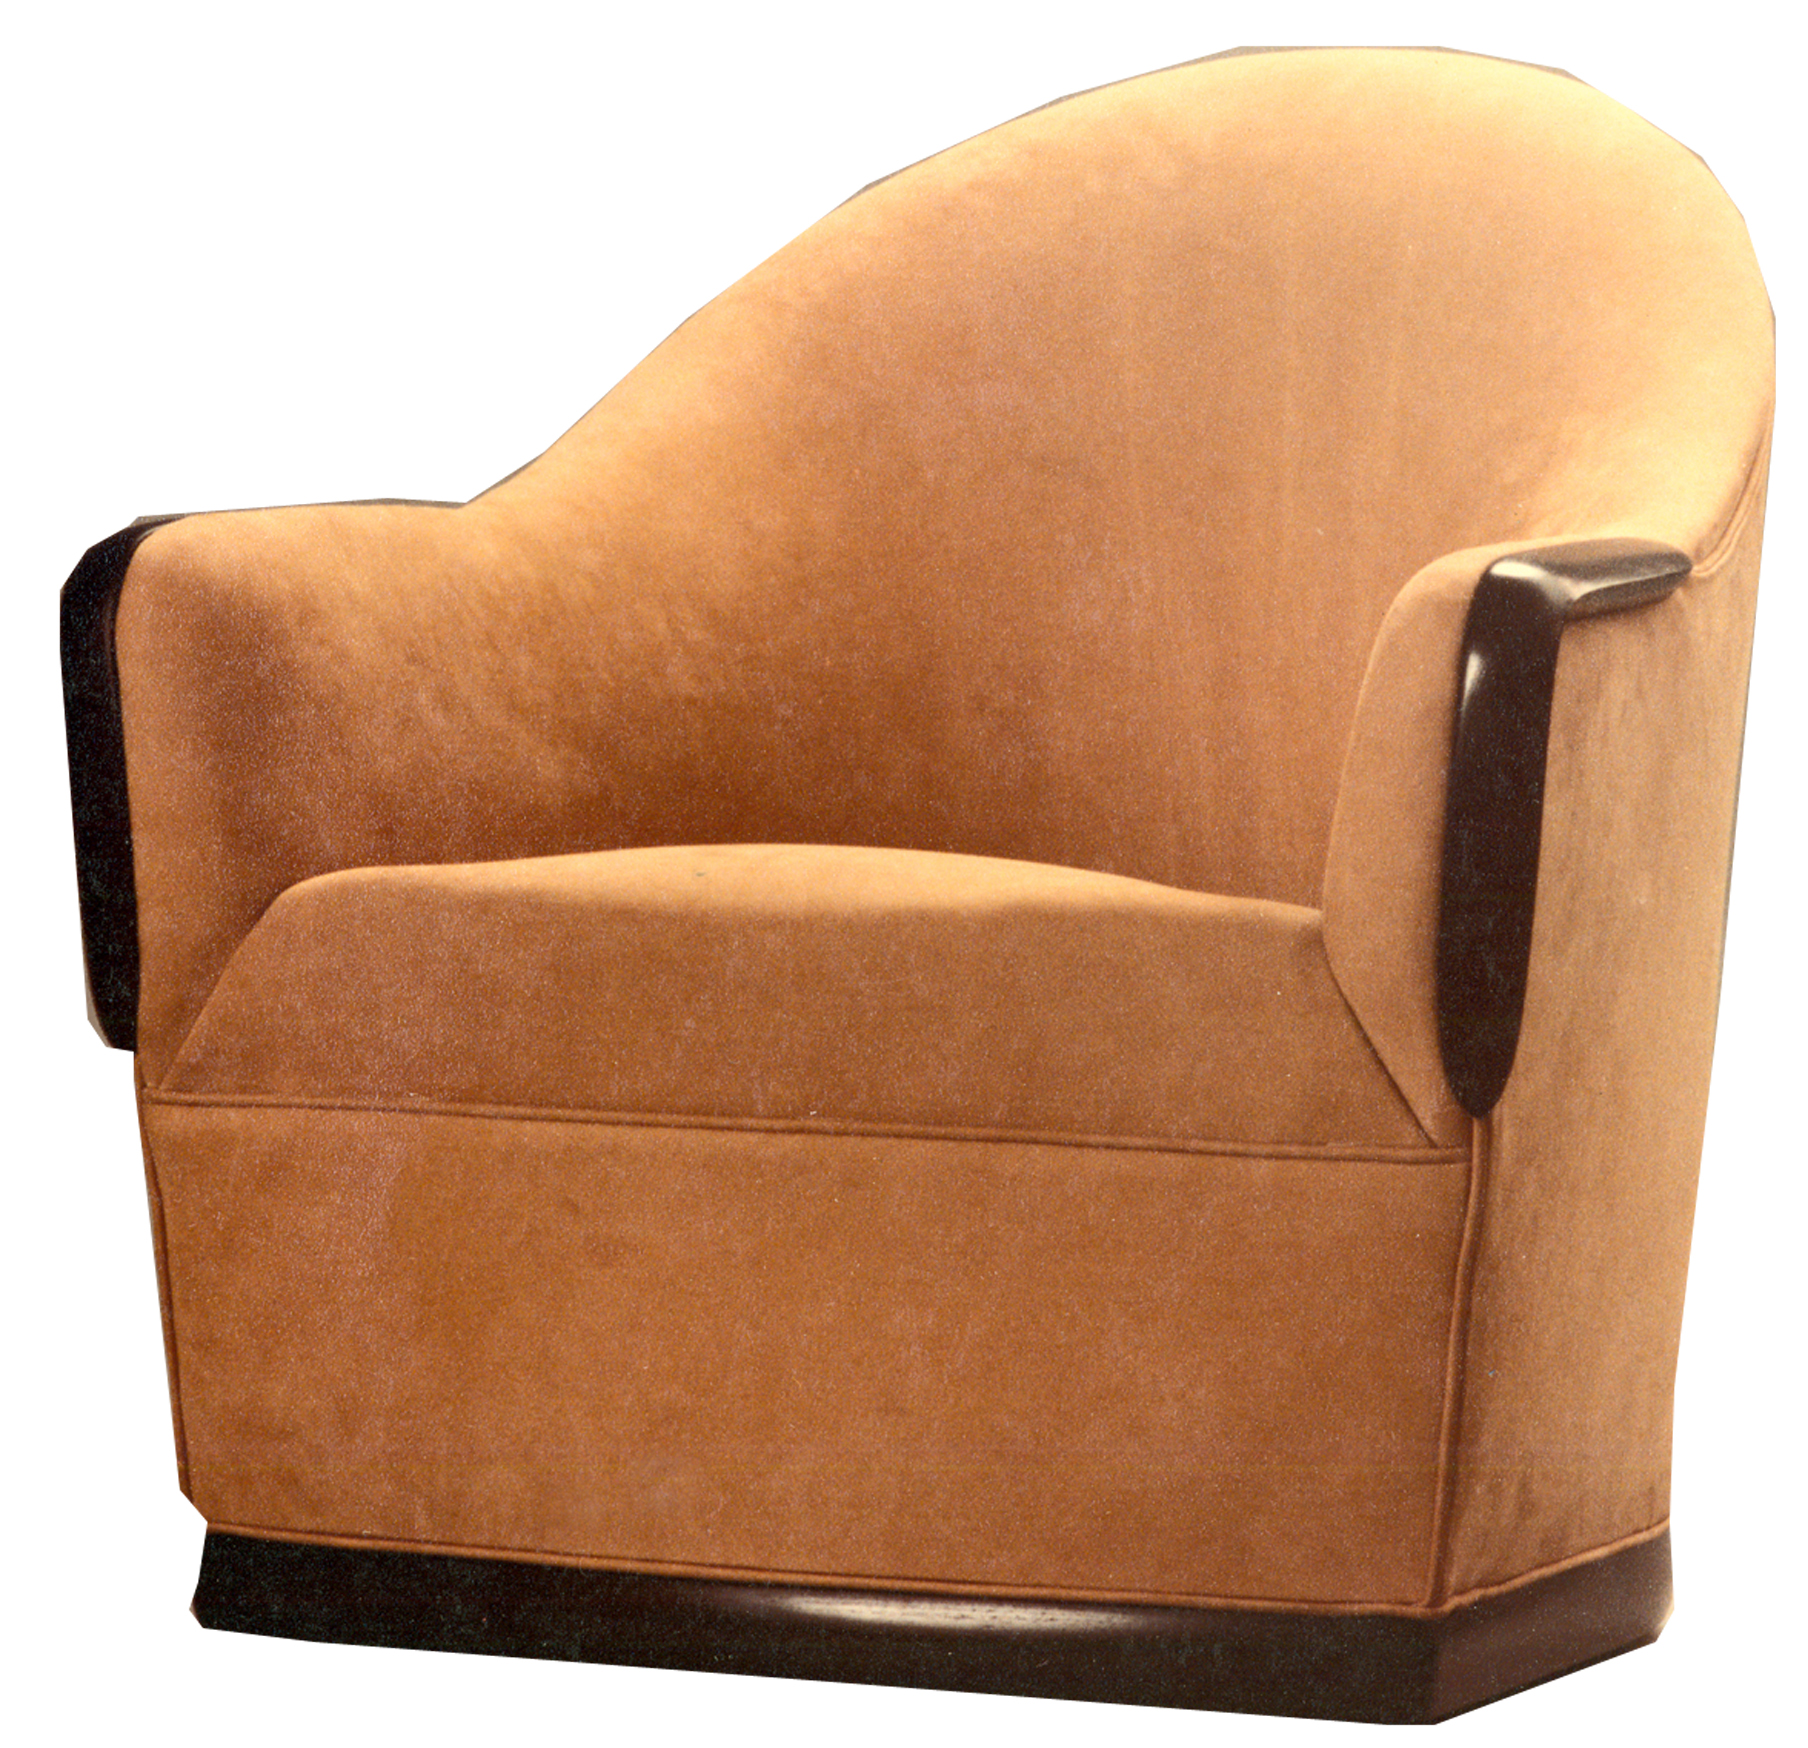 Bespoke Global - Product Detail - Swivel Barrel Chair